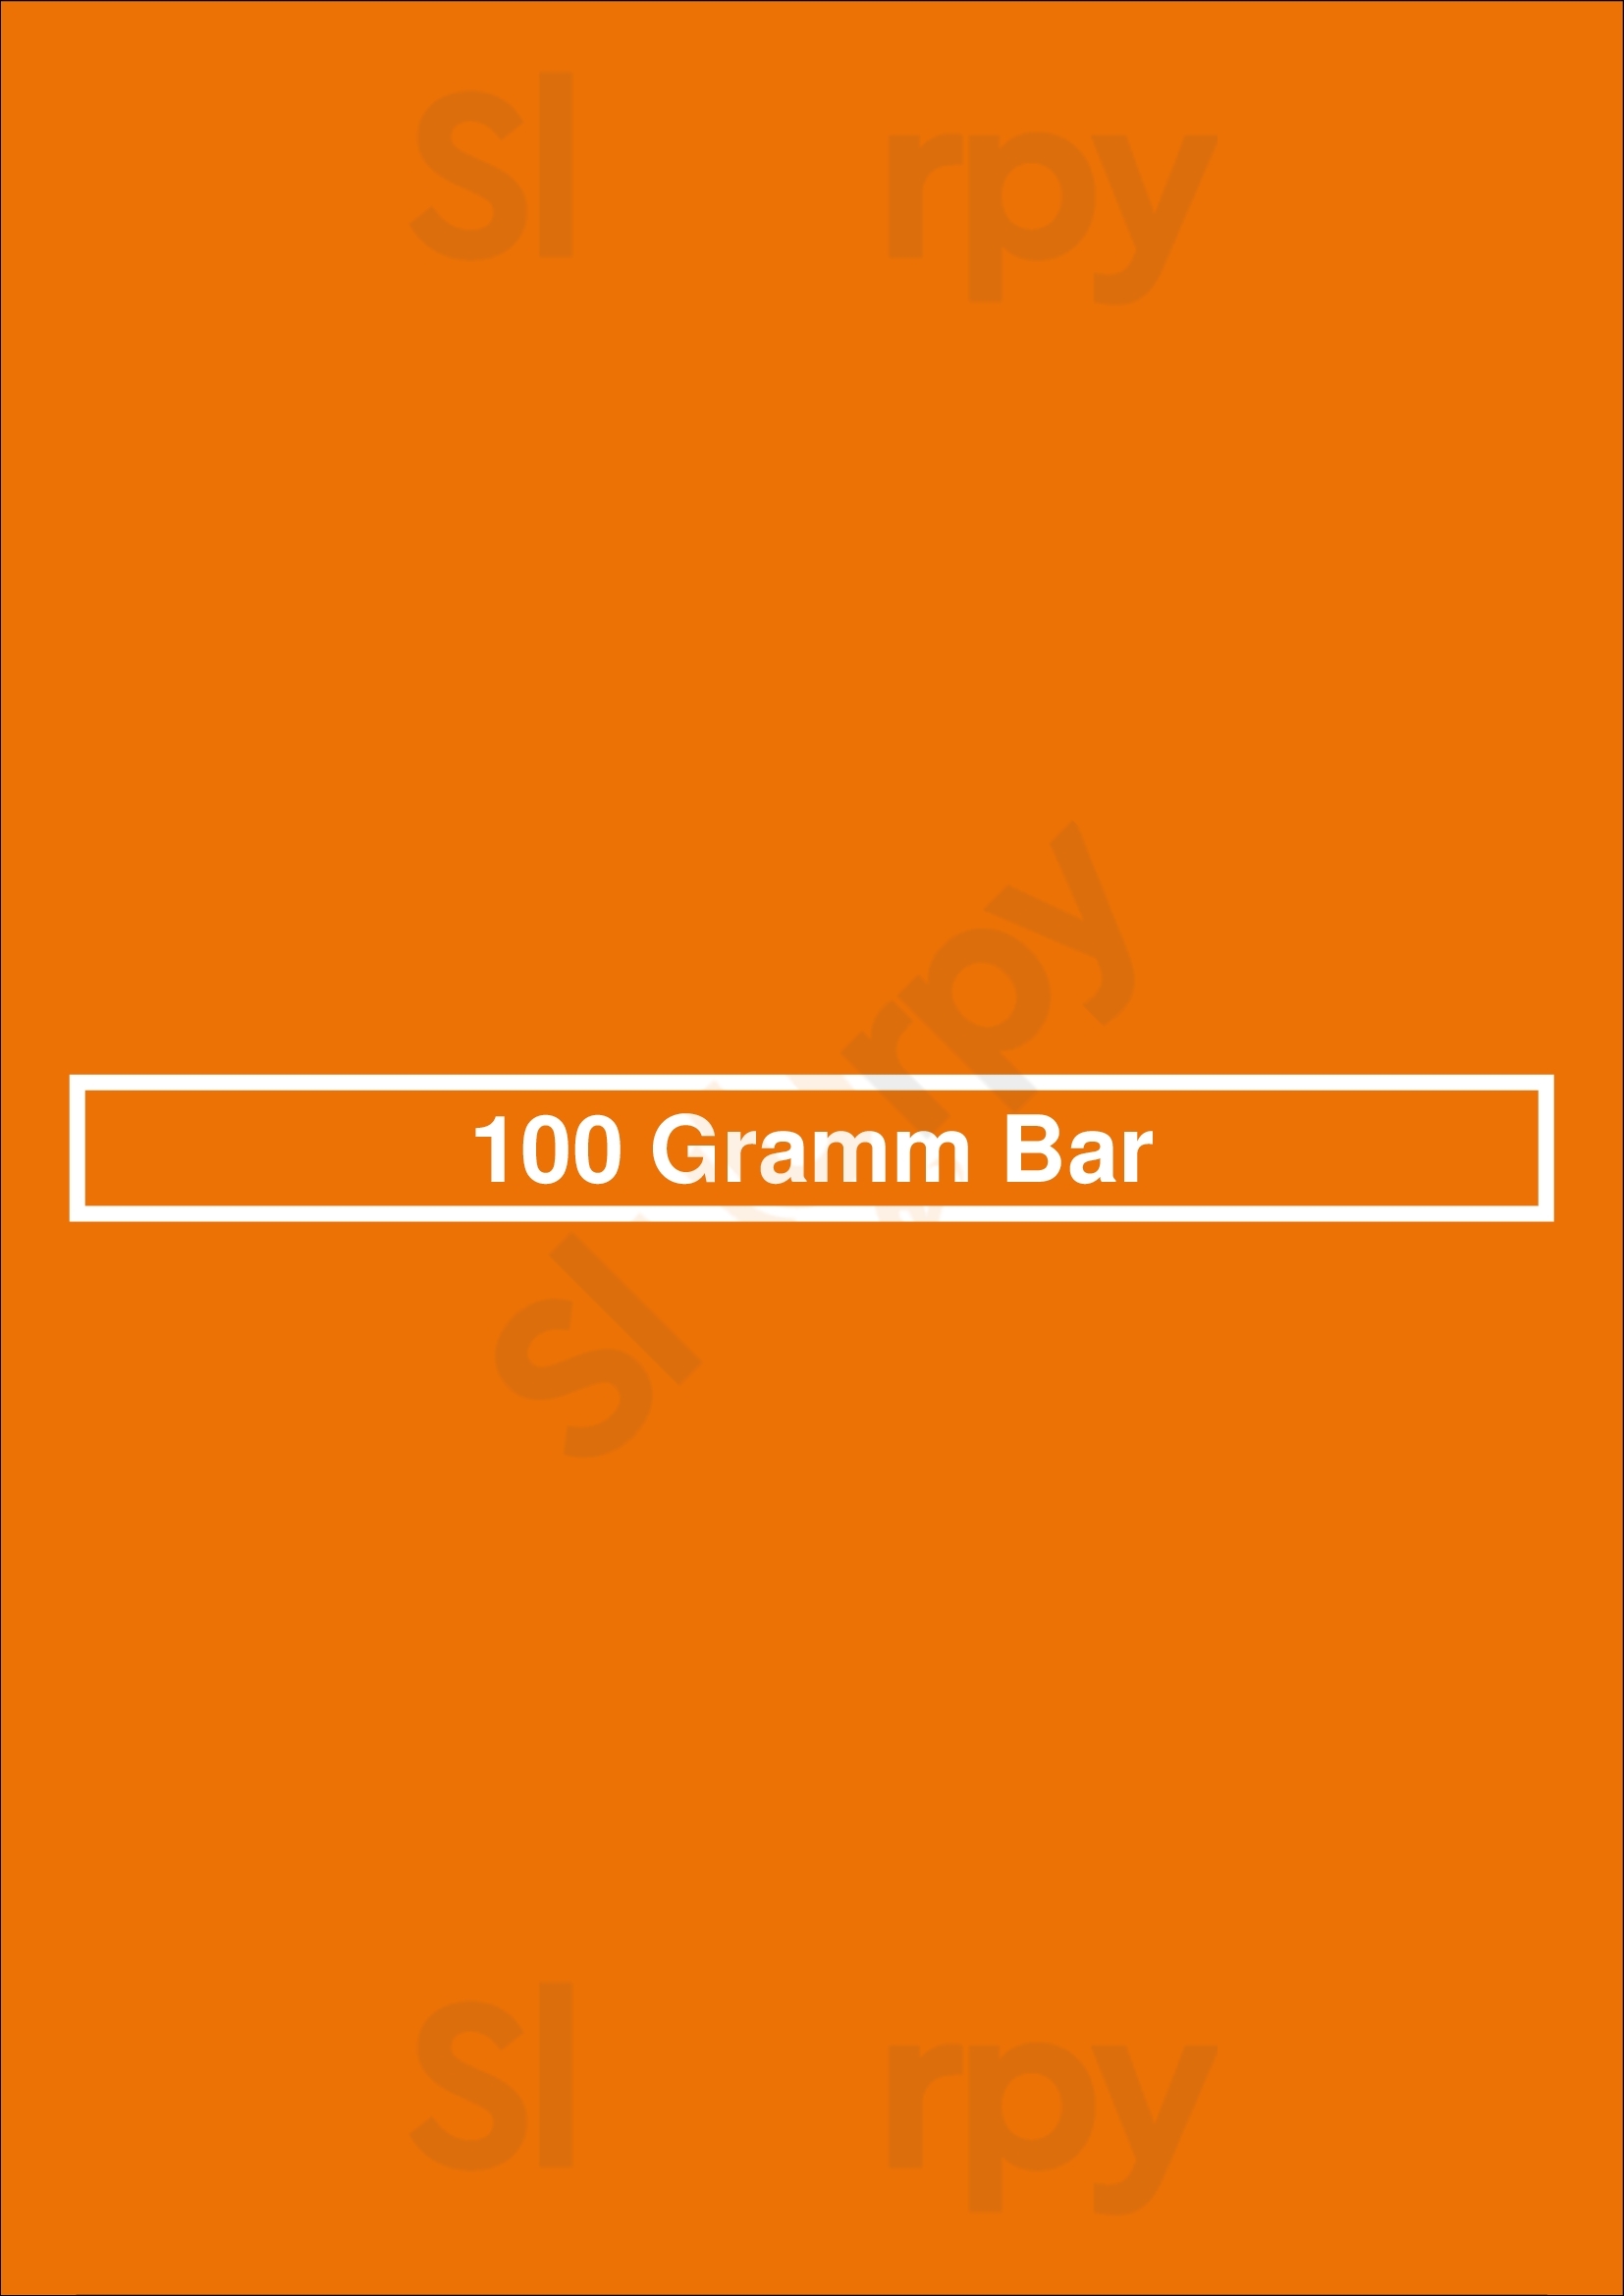 100 Gramm Bar Berlin Menu - 1